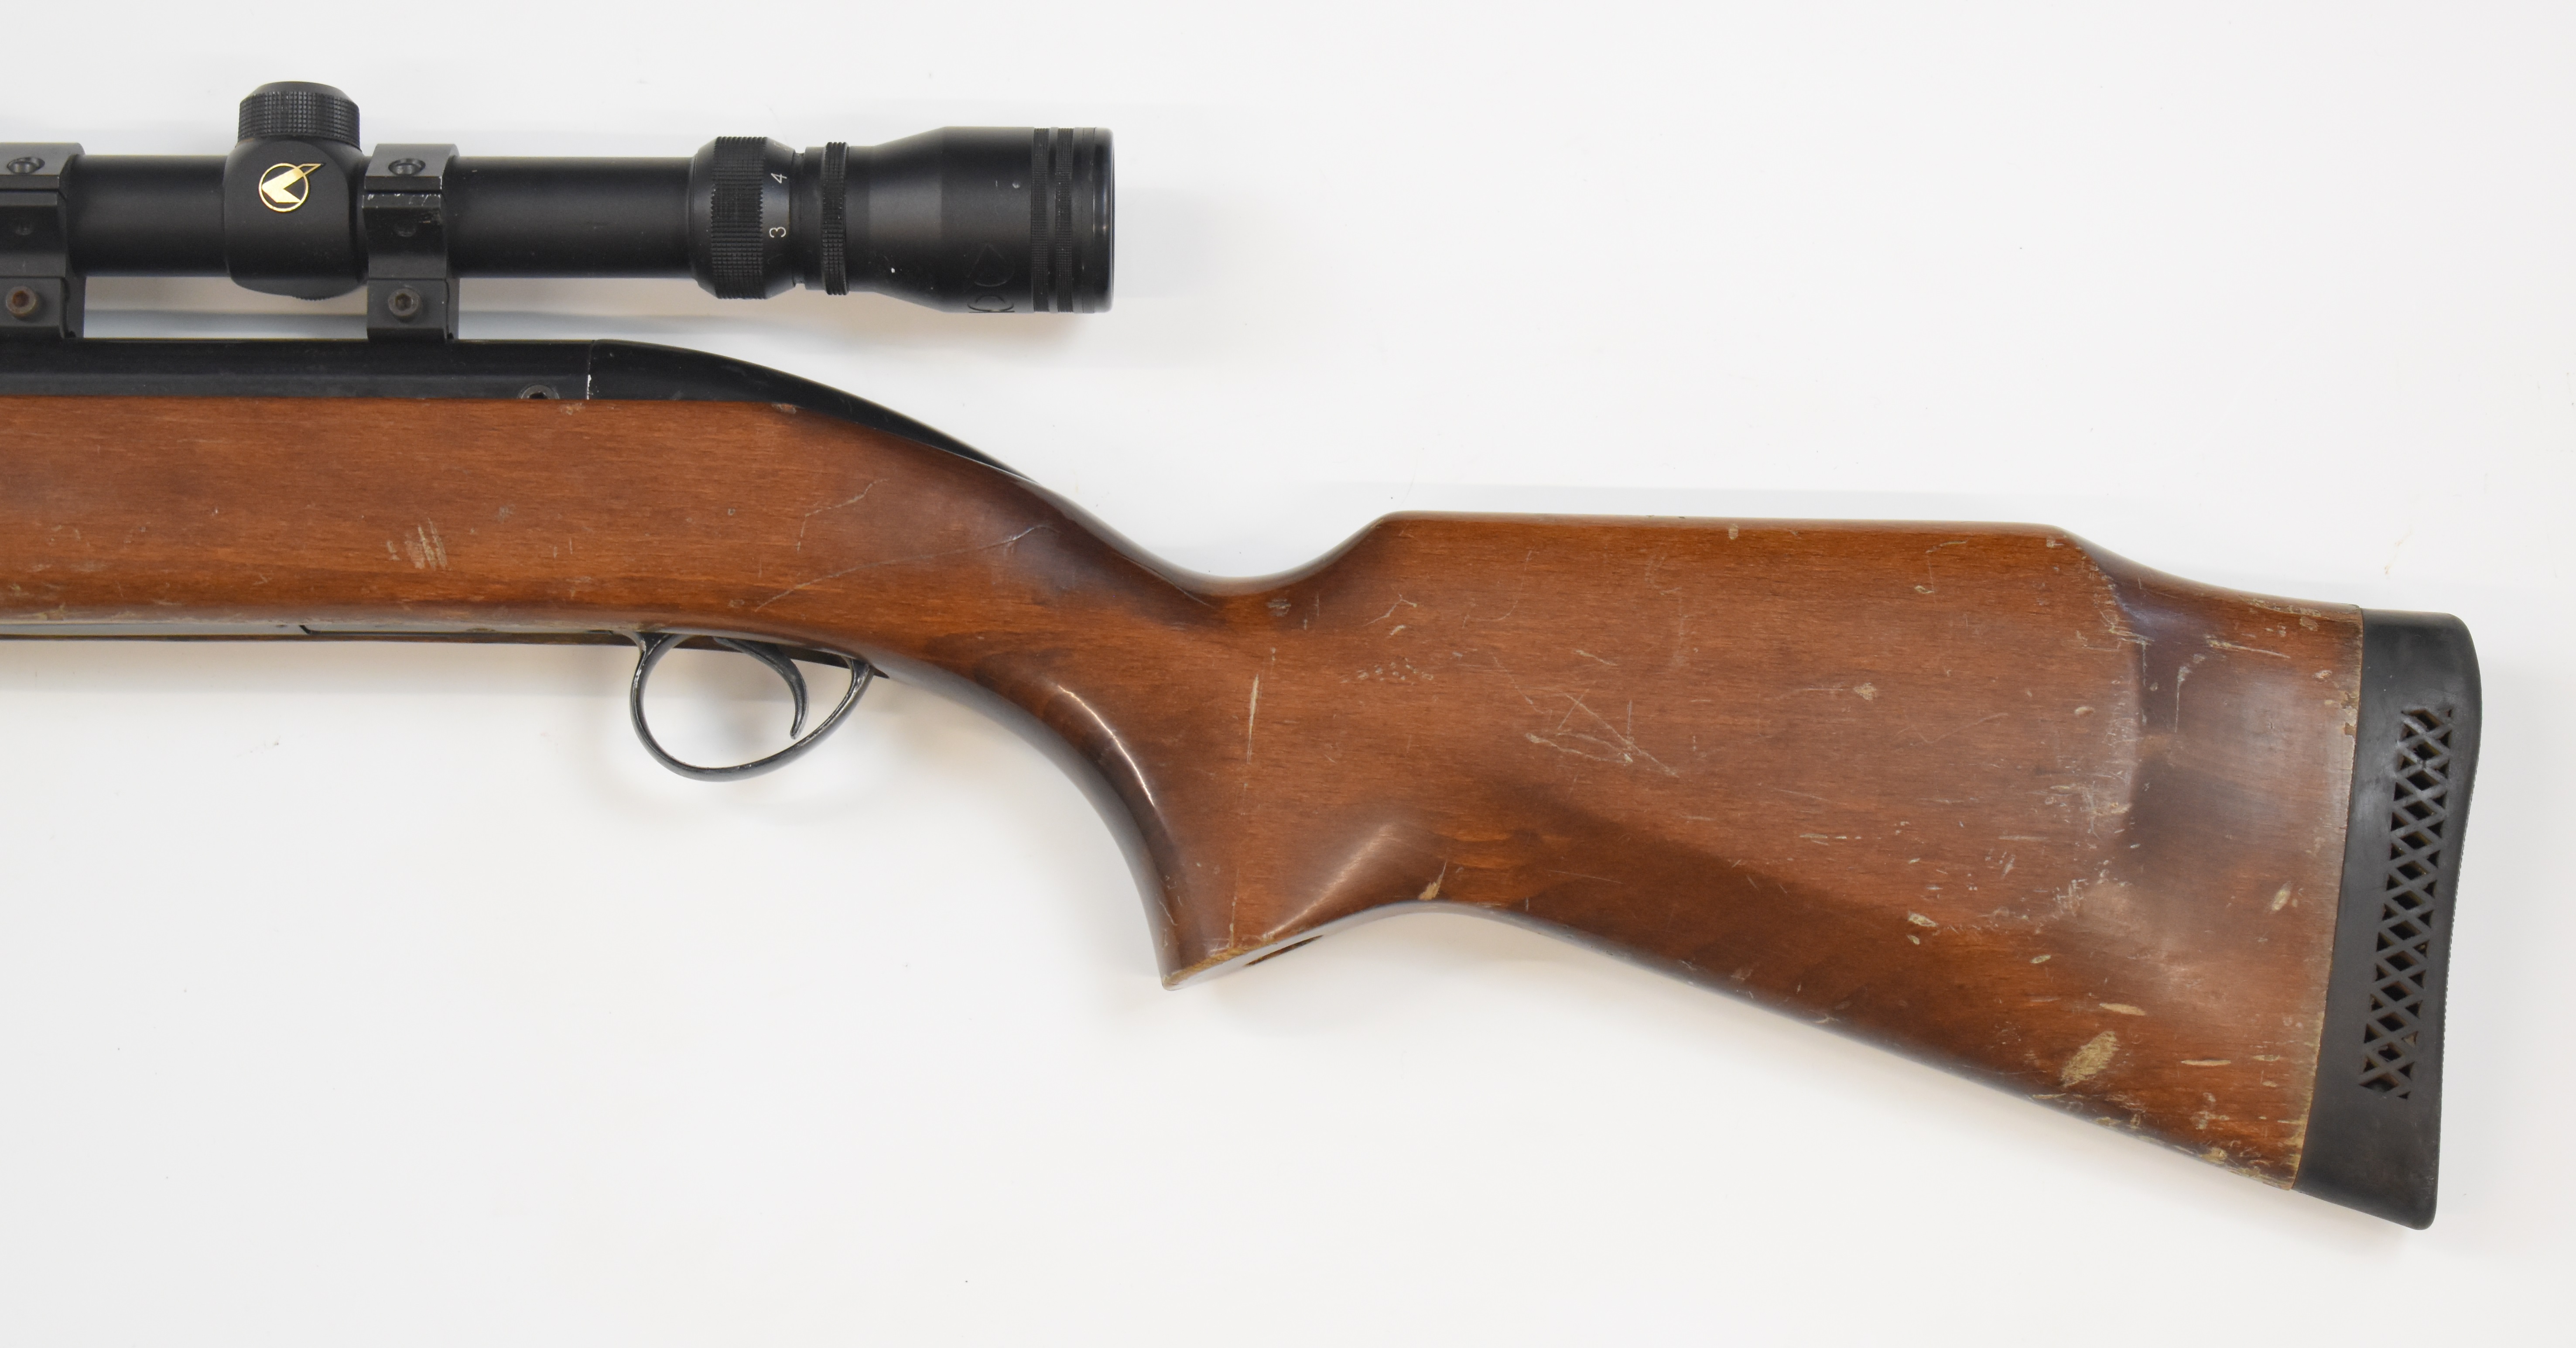 BSA Airsporter RB2 .22 under-lever air rifle with semi-pistol grip, raised cheek piece, sound - Image 7 of 9